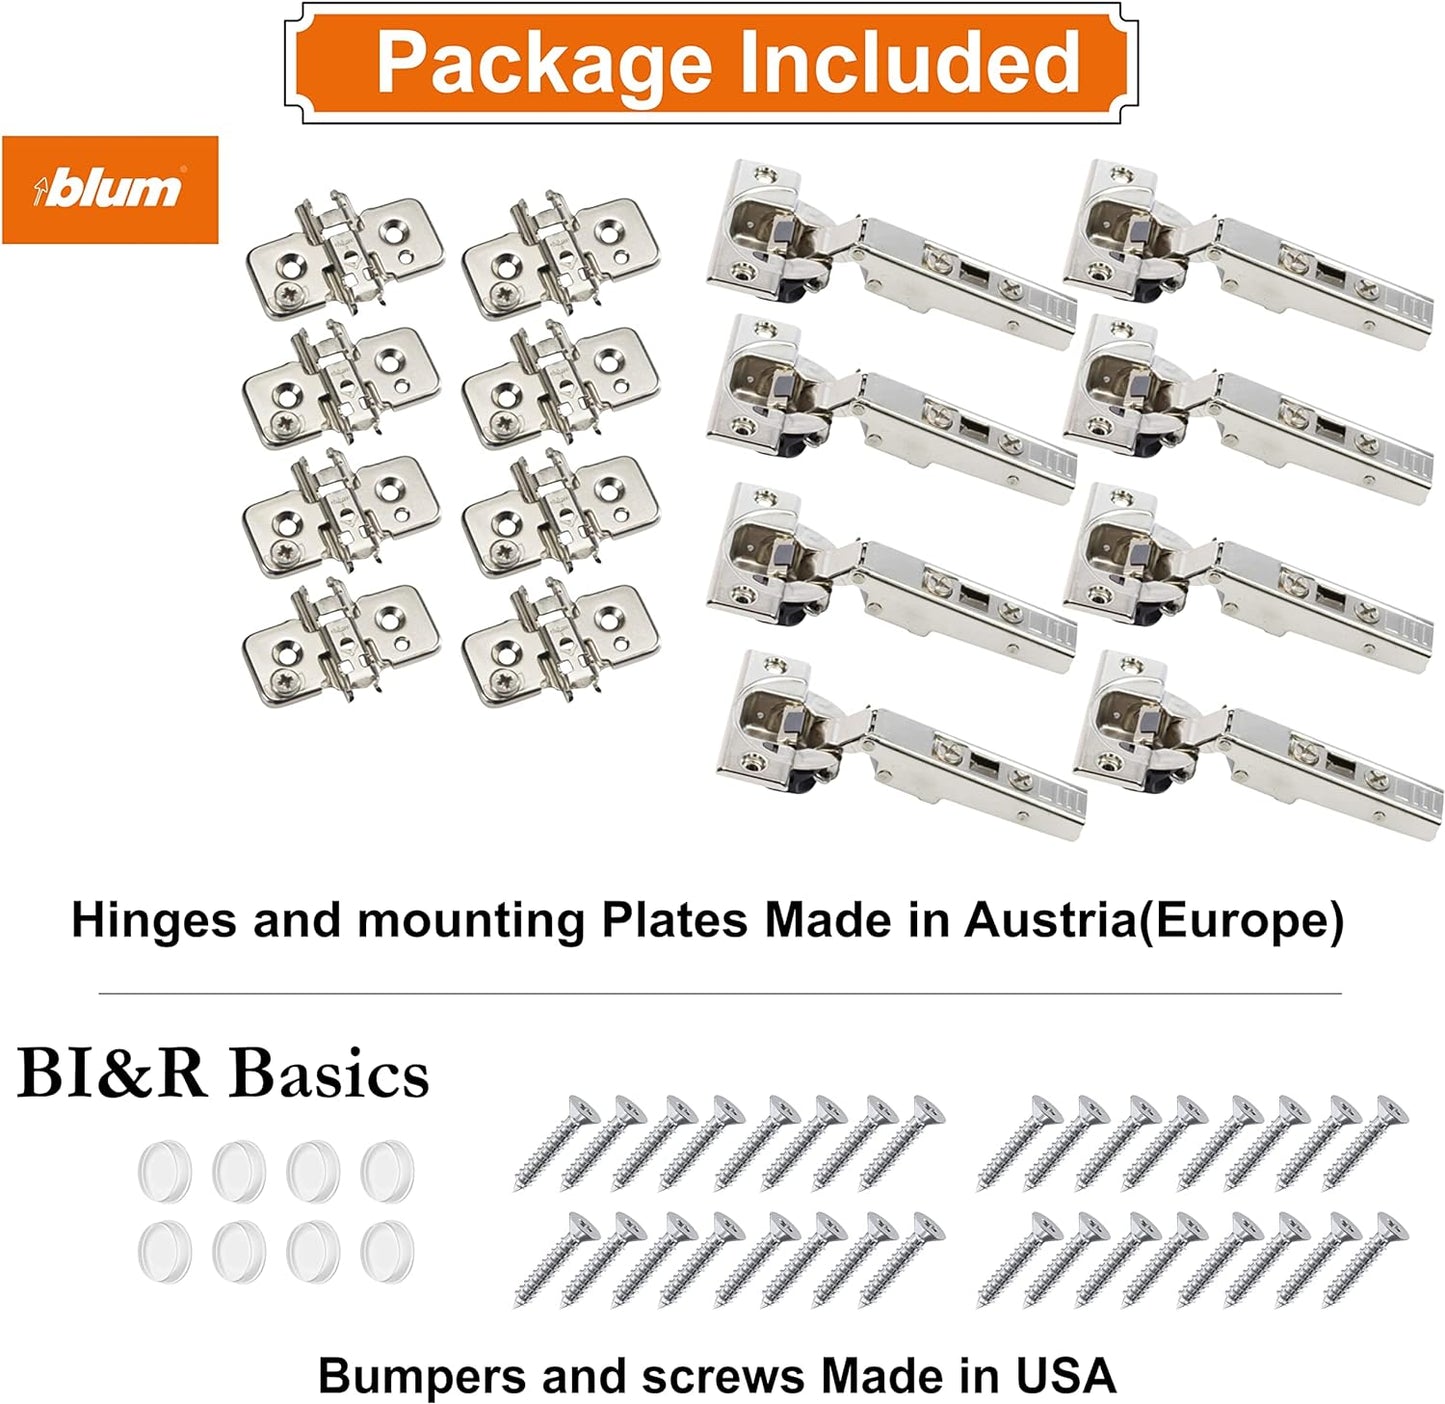 Blum 110 Degree Soft Close Hinges - Full Overlay Soft Close Frameless Application kit Pack of 8